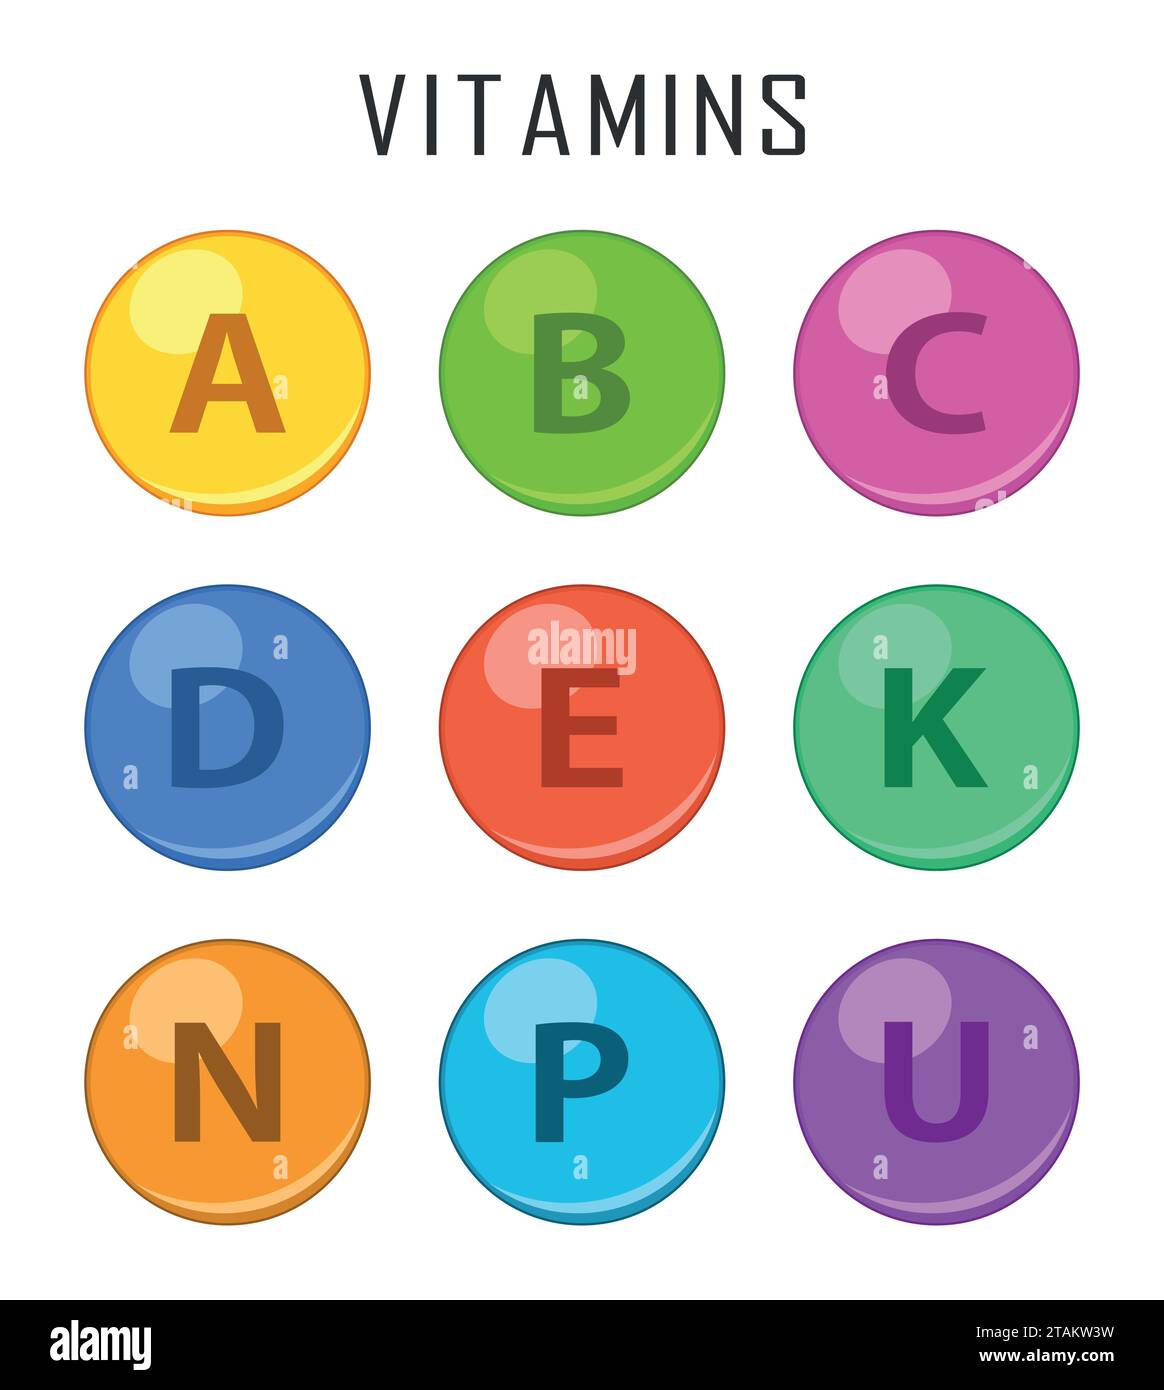 Vitamins colorful pills capcule icons isolated on white background. Retinol vitamins drop pills capsule. Vector illustartion Stock Vector